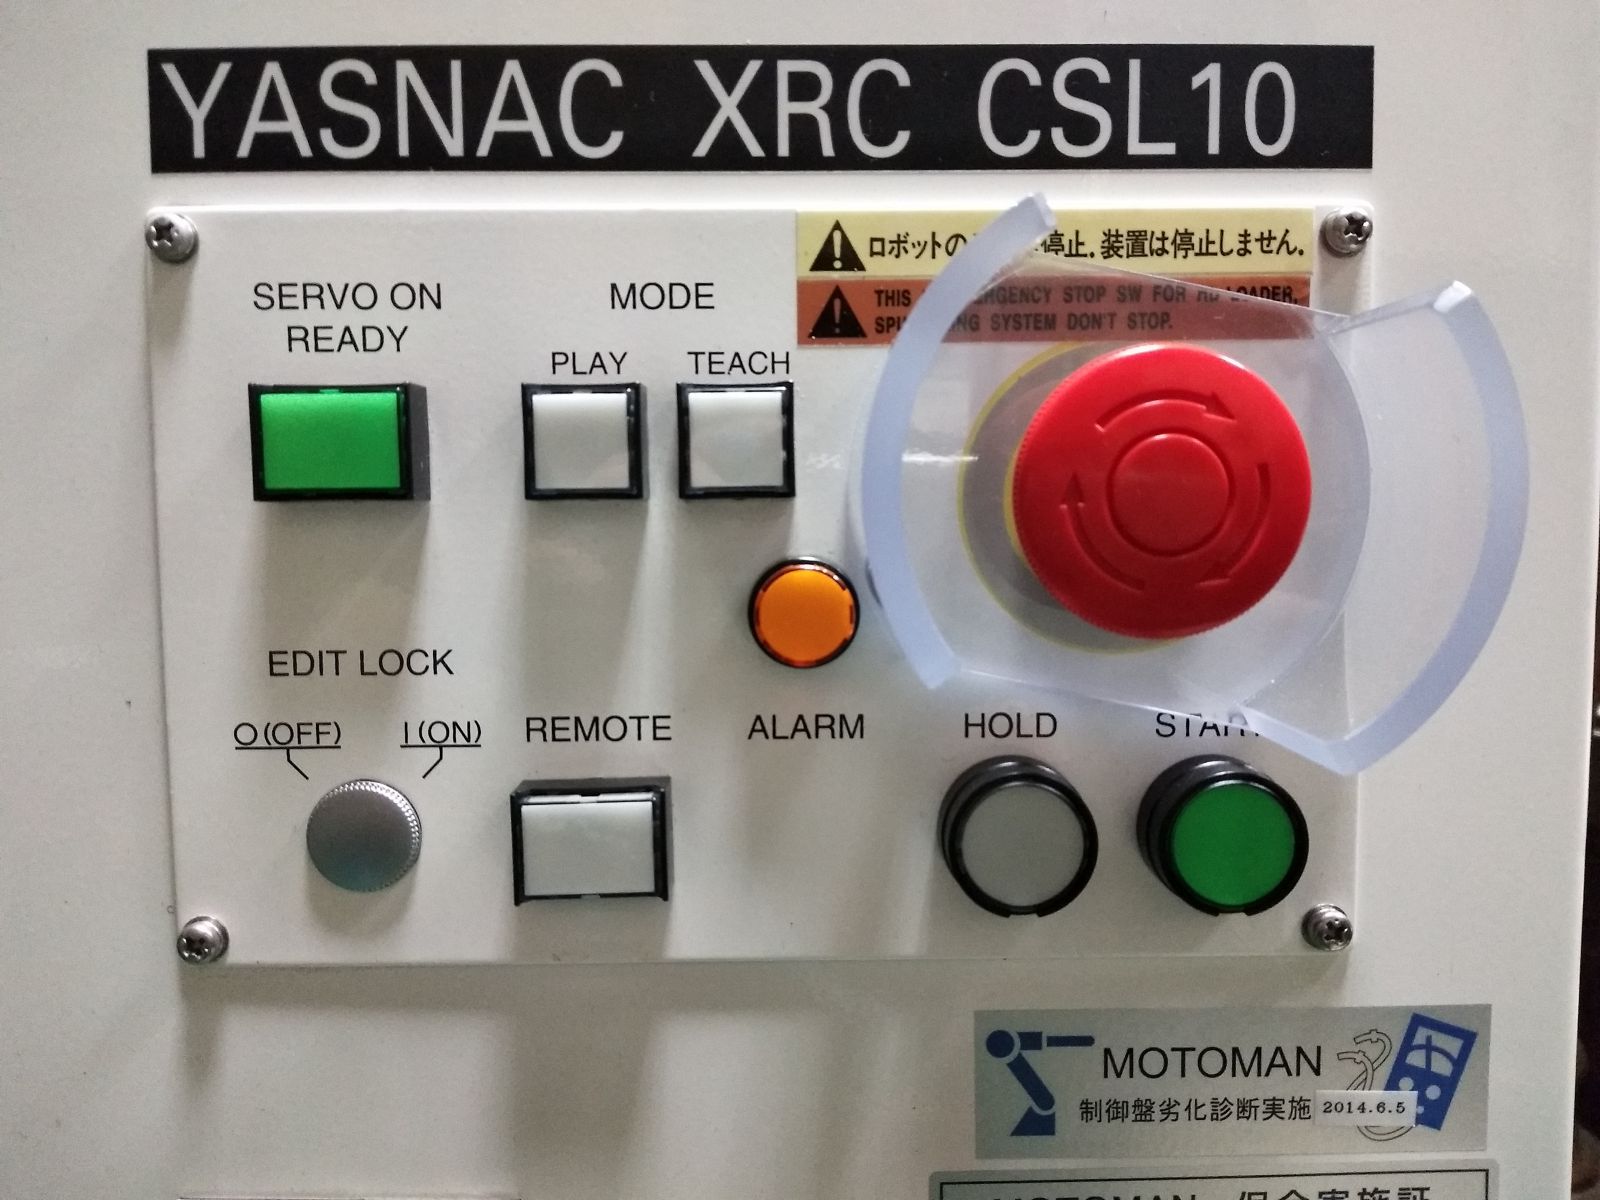 YASKAWA ROBOT MOTOMAN YASNAC XRC CSL10 ERCR-CSL 10-RA00